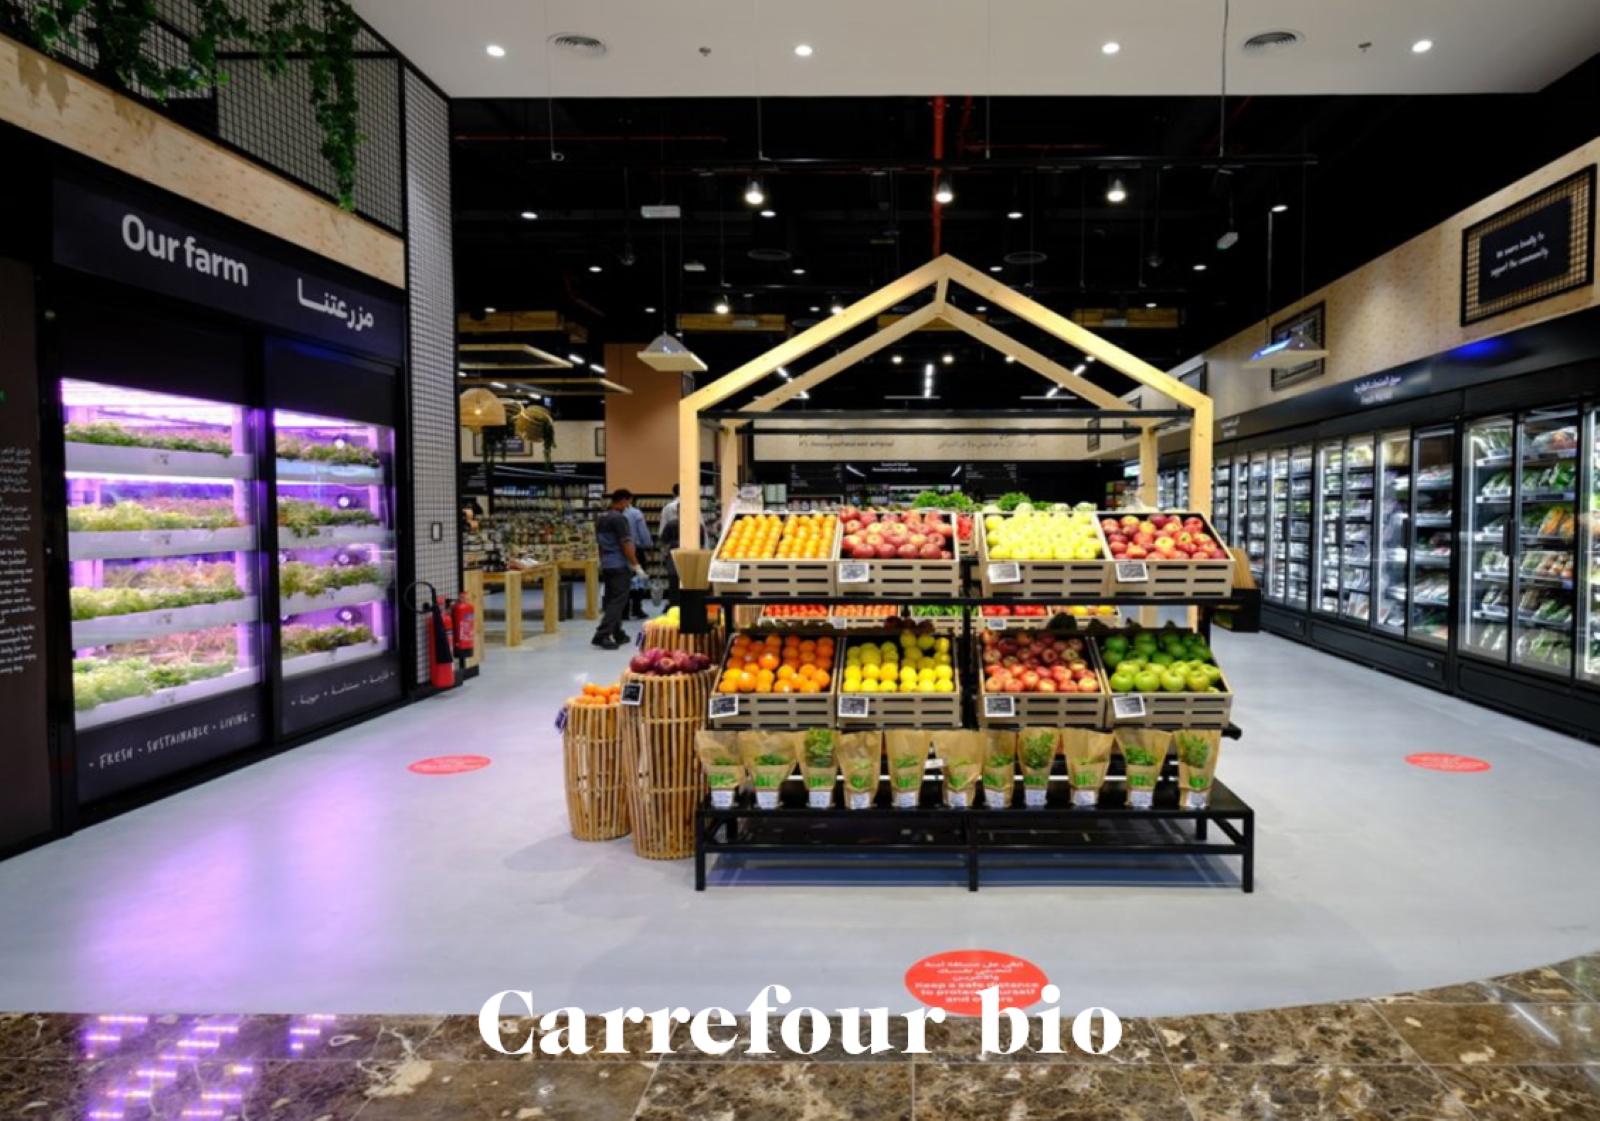 Carrefour bio dubai retail tour missions mmm 0